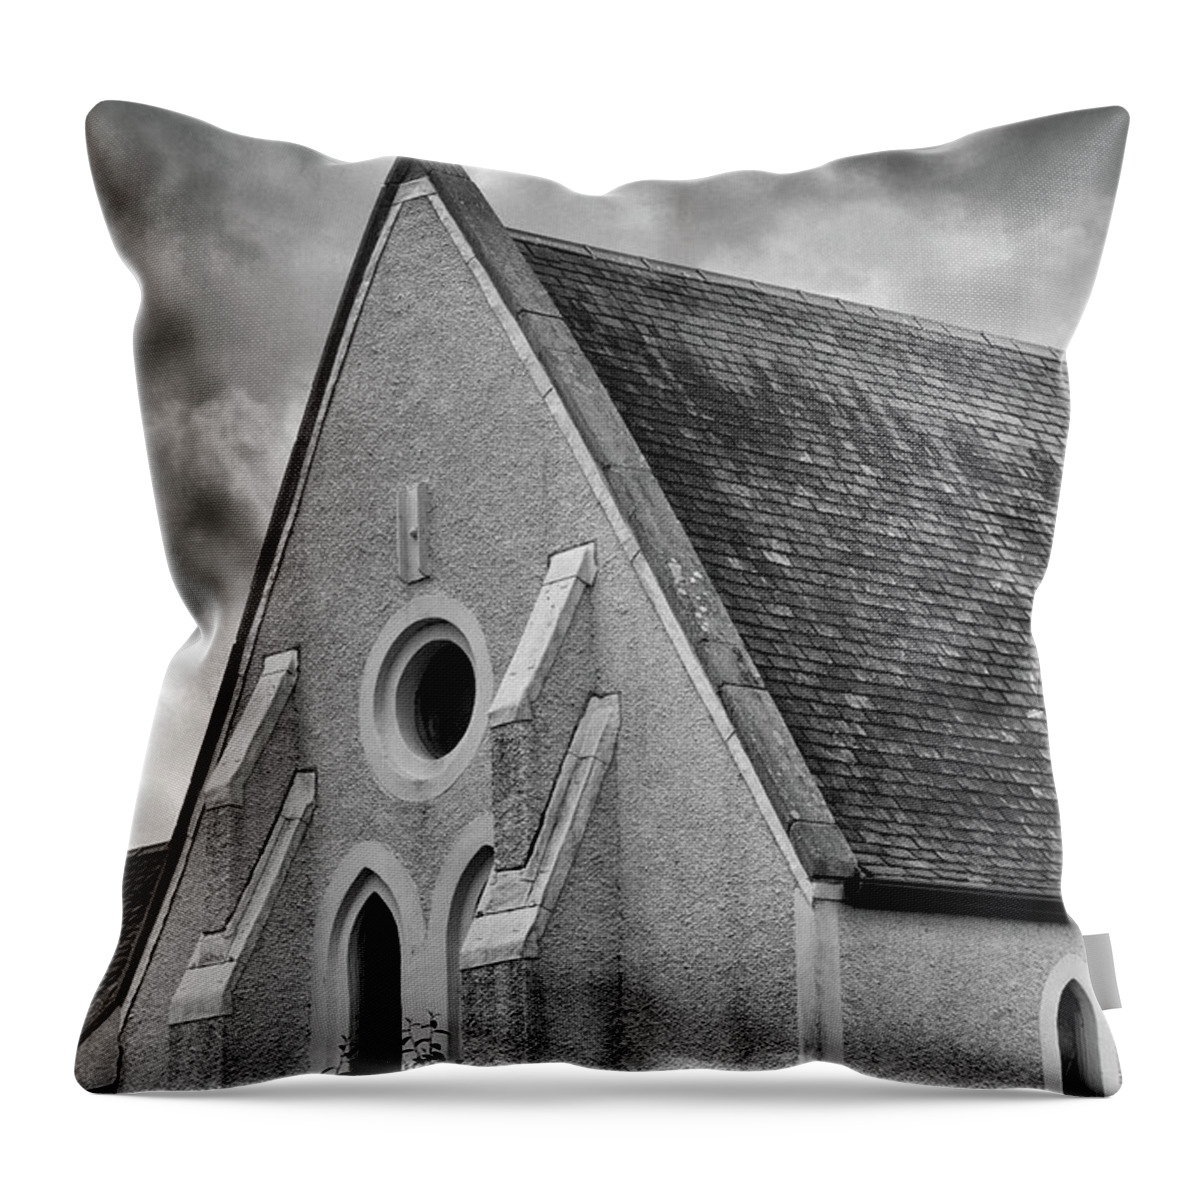 Saint Mungo Throw Pillow featuring the photograph St.Mungo's Church - Ladycroft, Edinburgh by Yvonne Johnstone